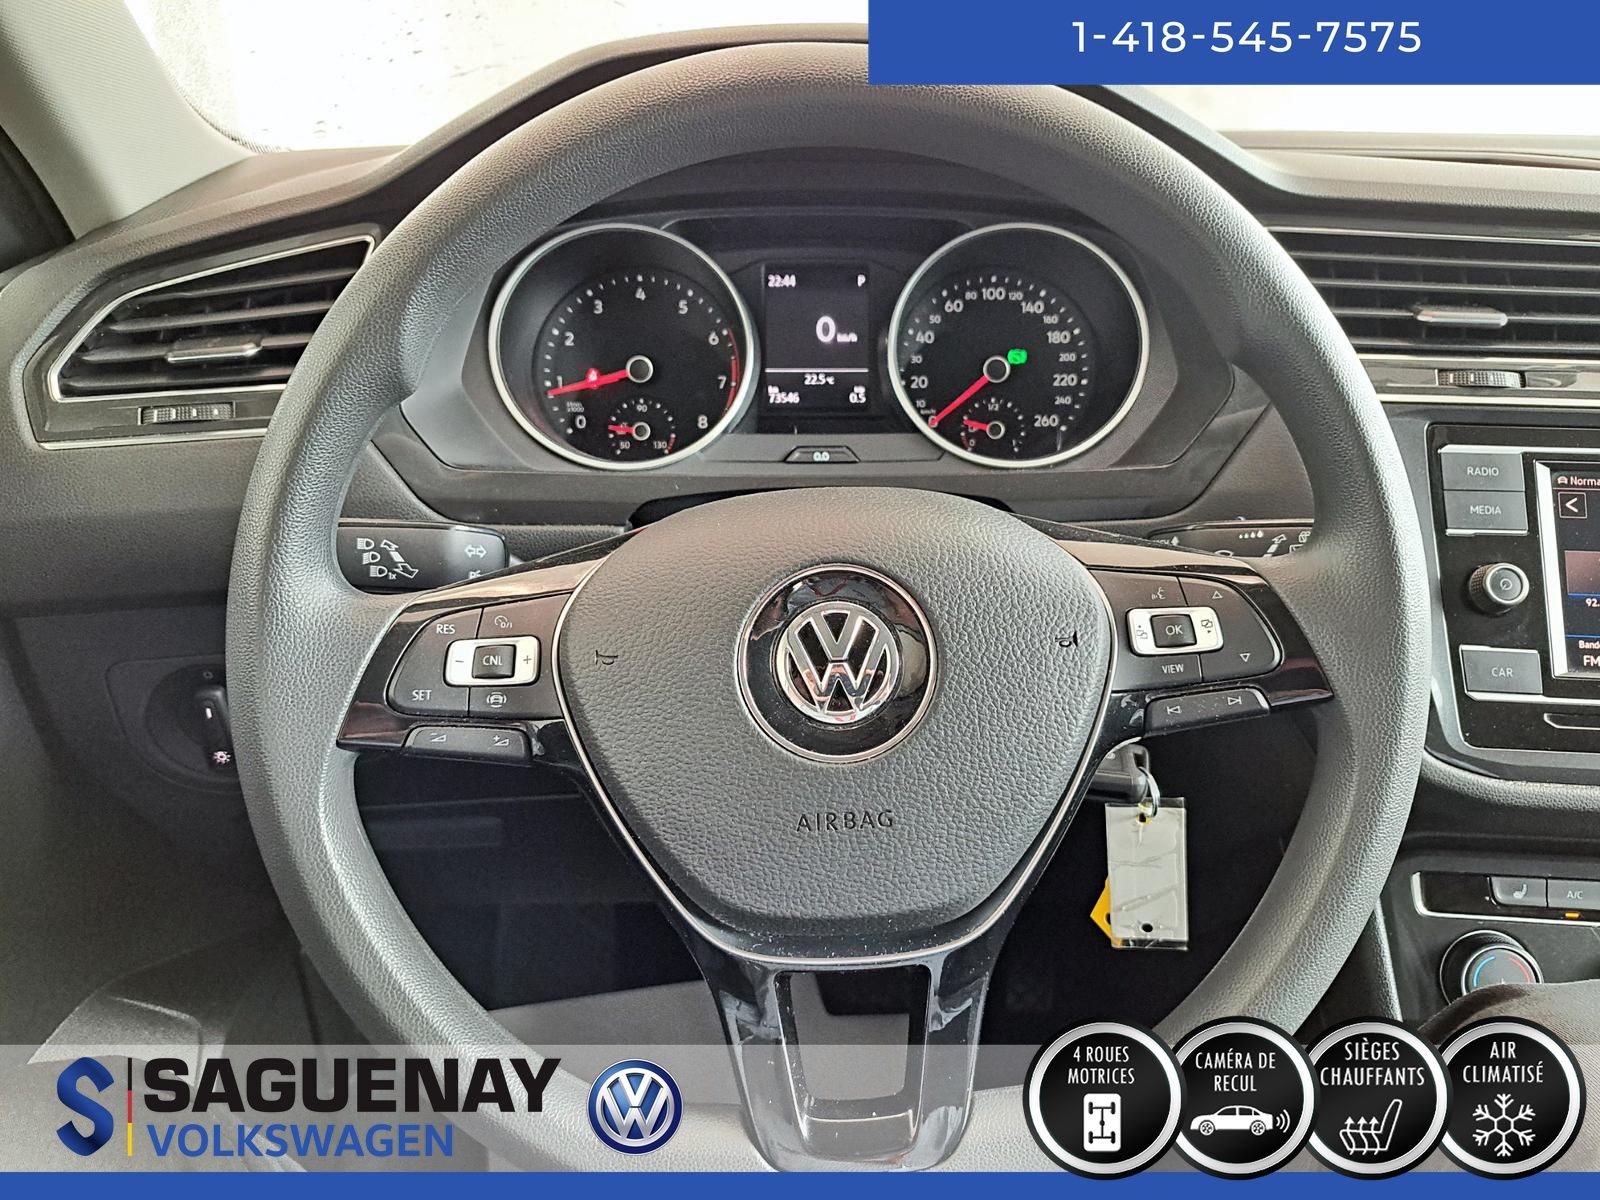 Volkswagen Tiguan Trendline 4 MOTION  (95$/Sem)* 2019 STOCK : GS269A